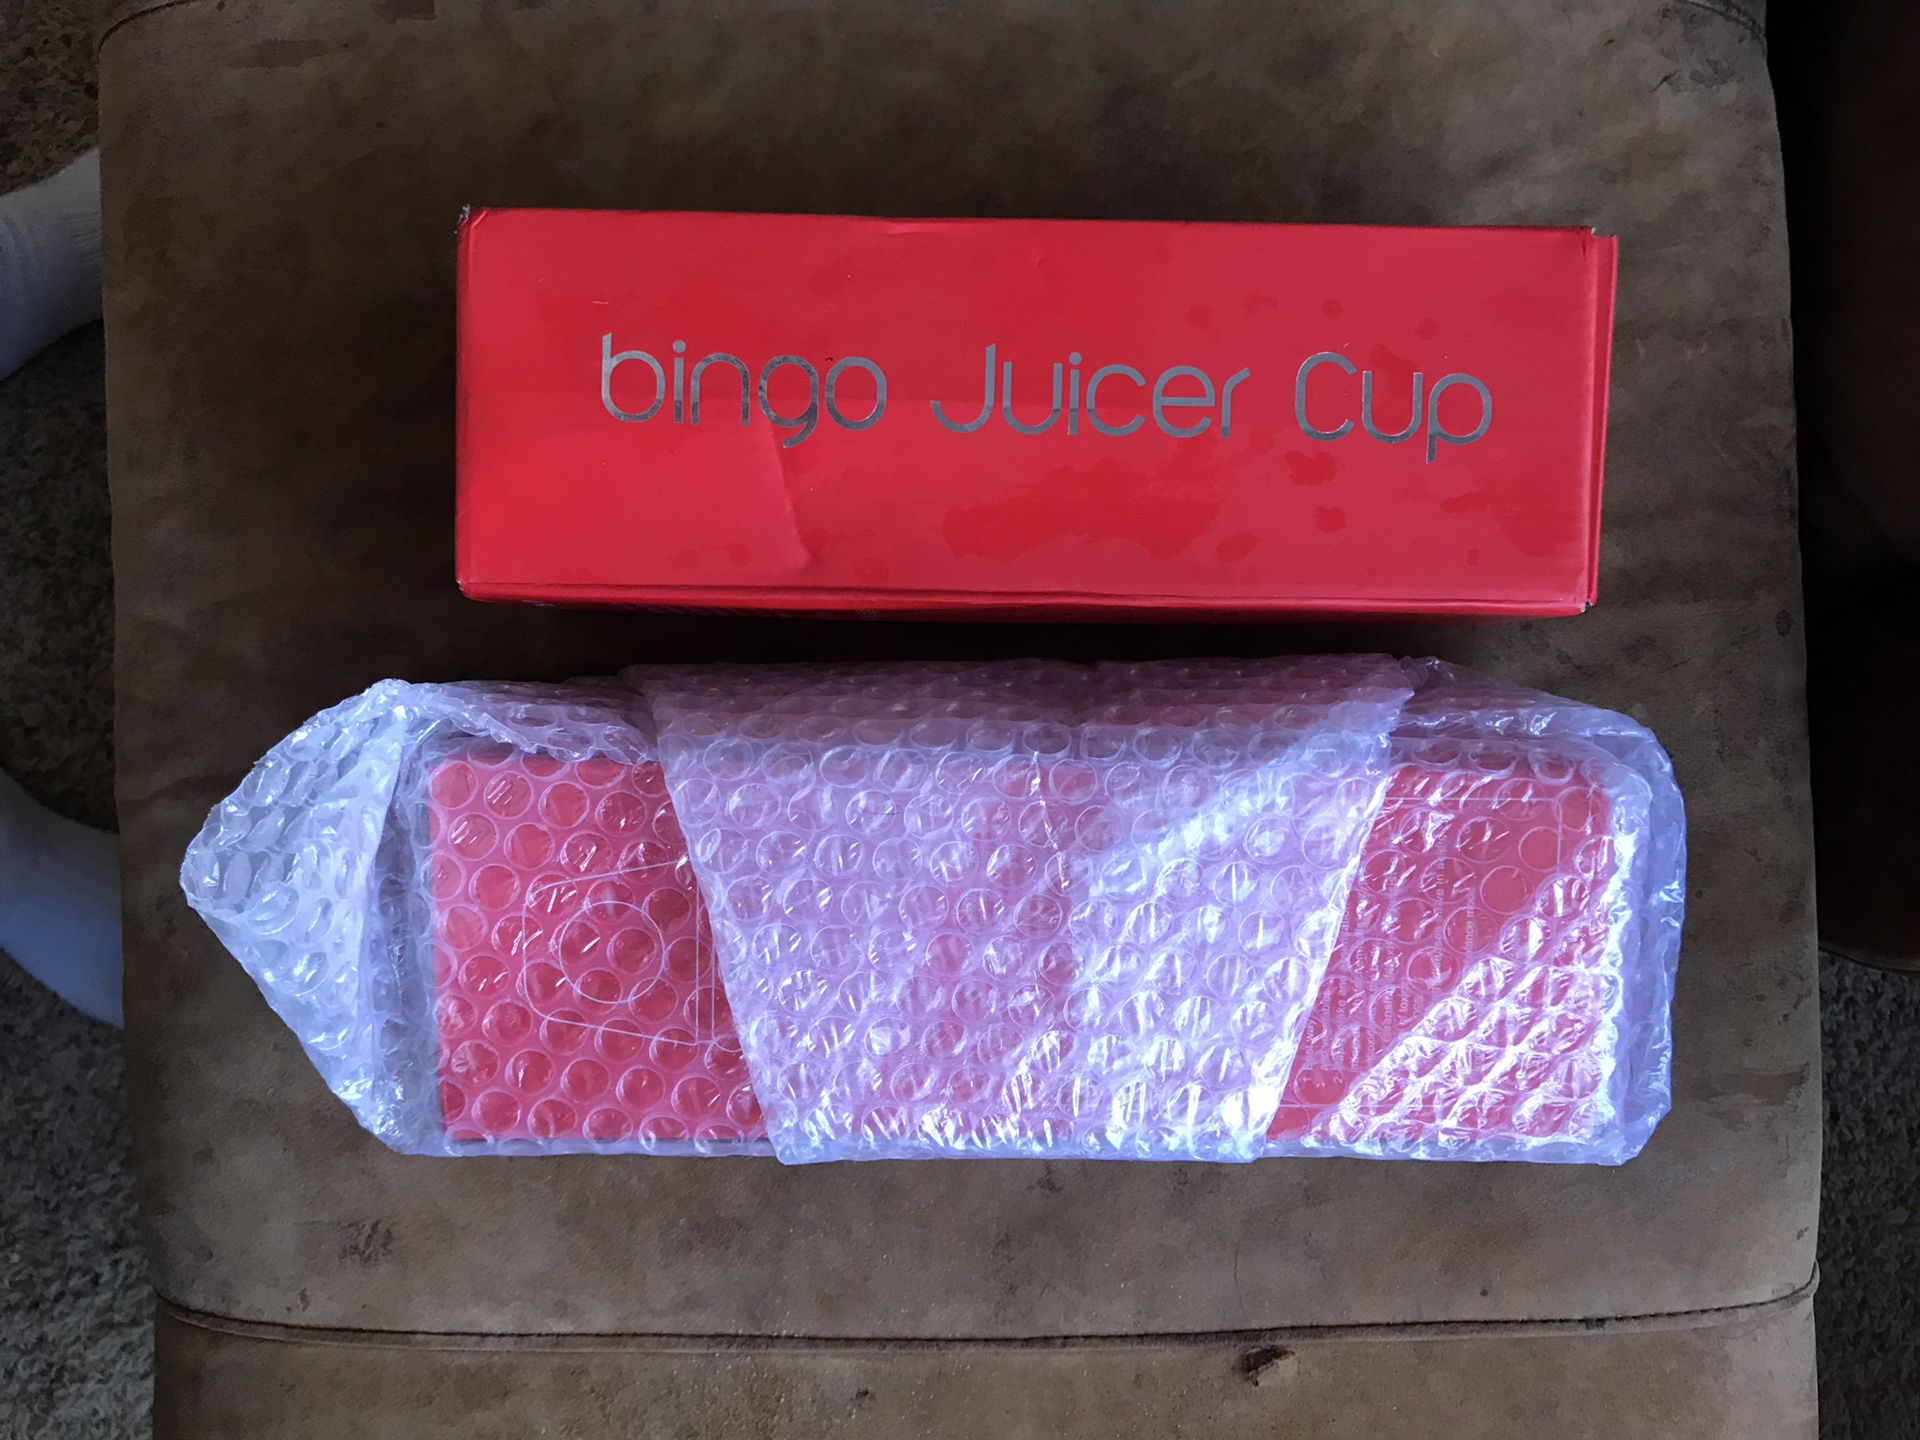 Bingo Juicer Cup (2 quantity)